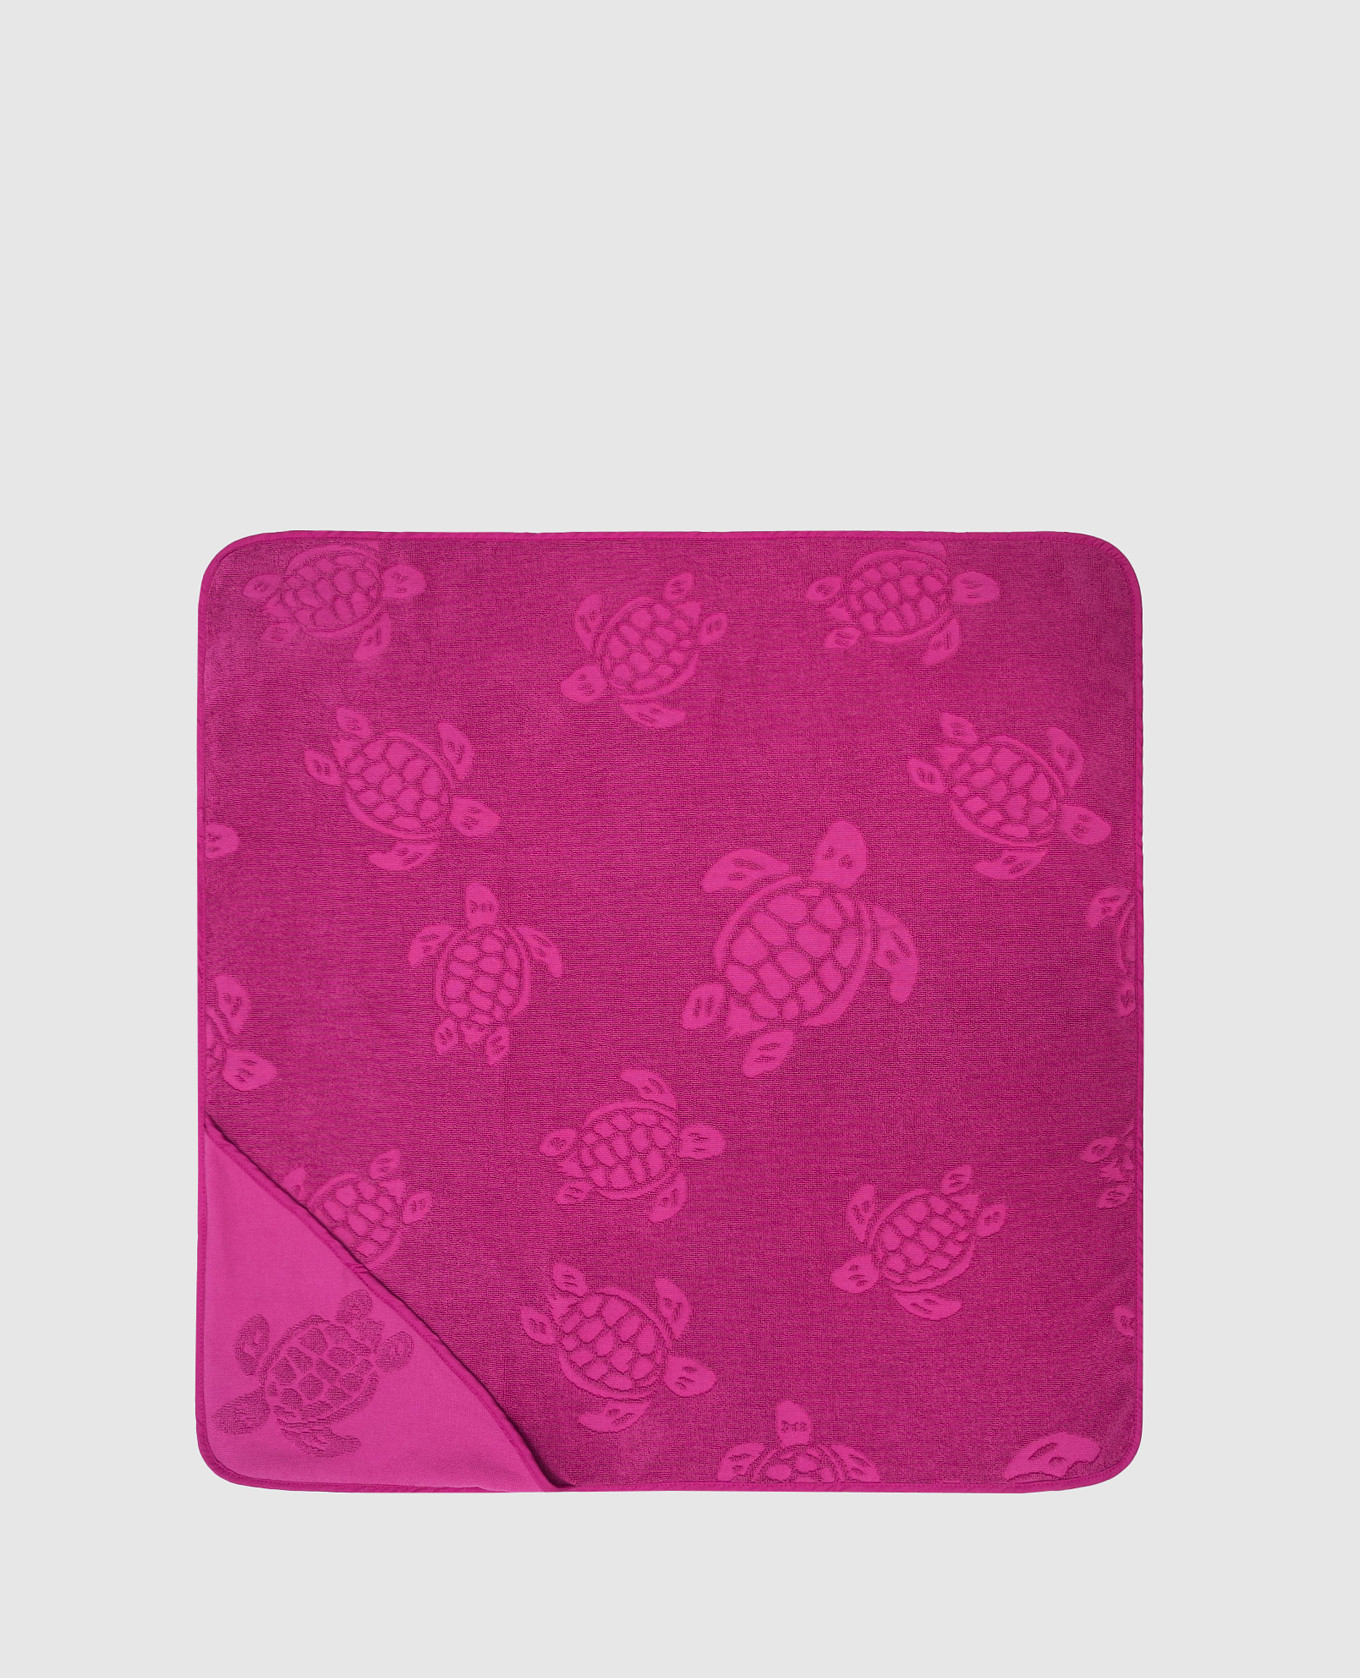 Children's pink towel SANTOU in a pattern